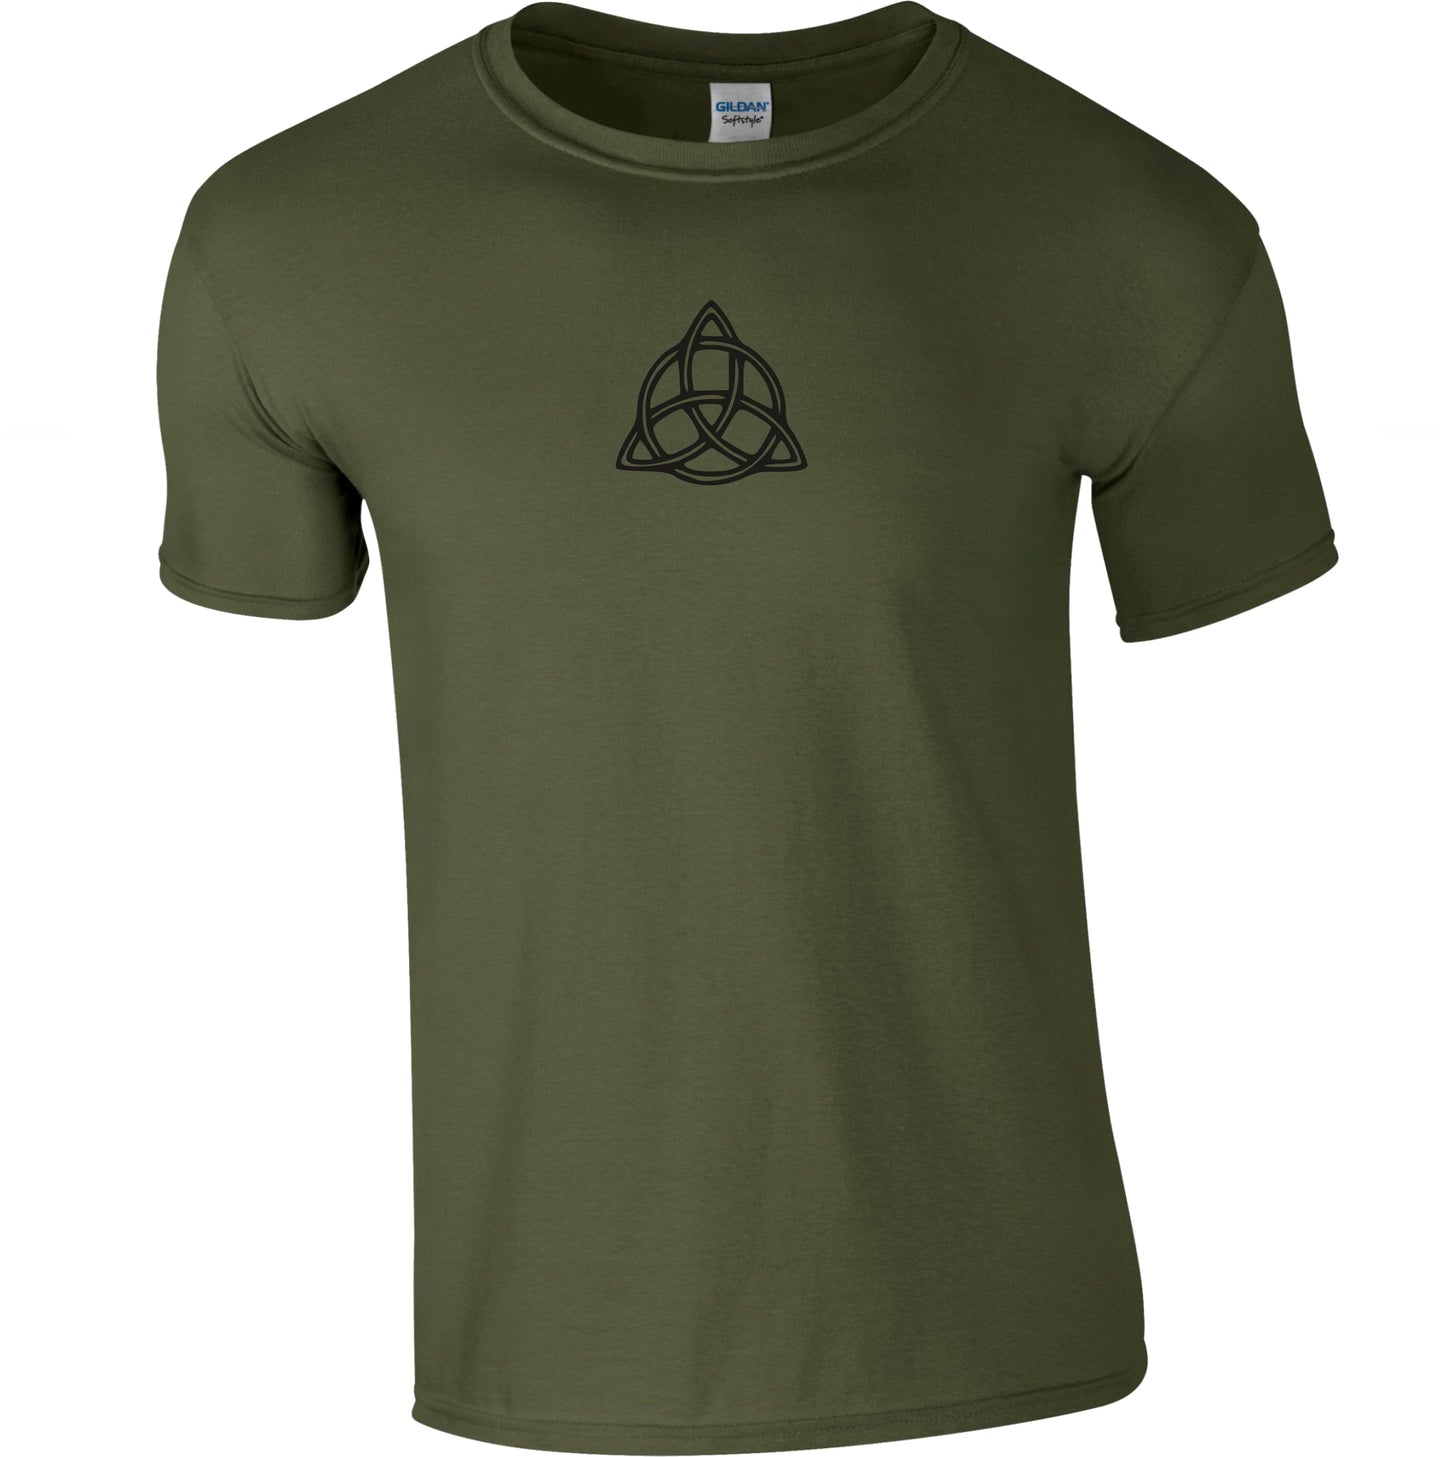 Triquetra 'Irish Trinity Knot' Symbol T-Shirt - Celtic, Pagan, Various Colours